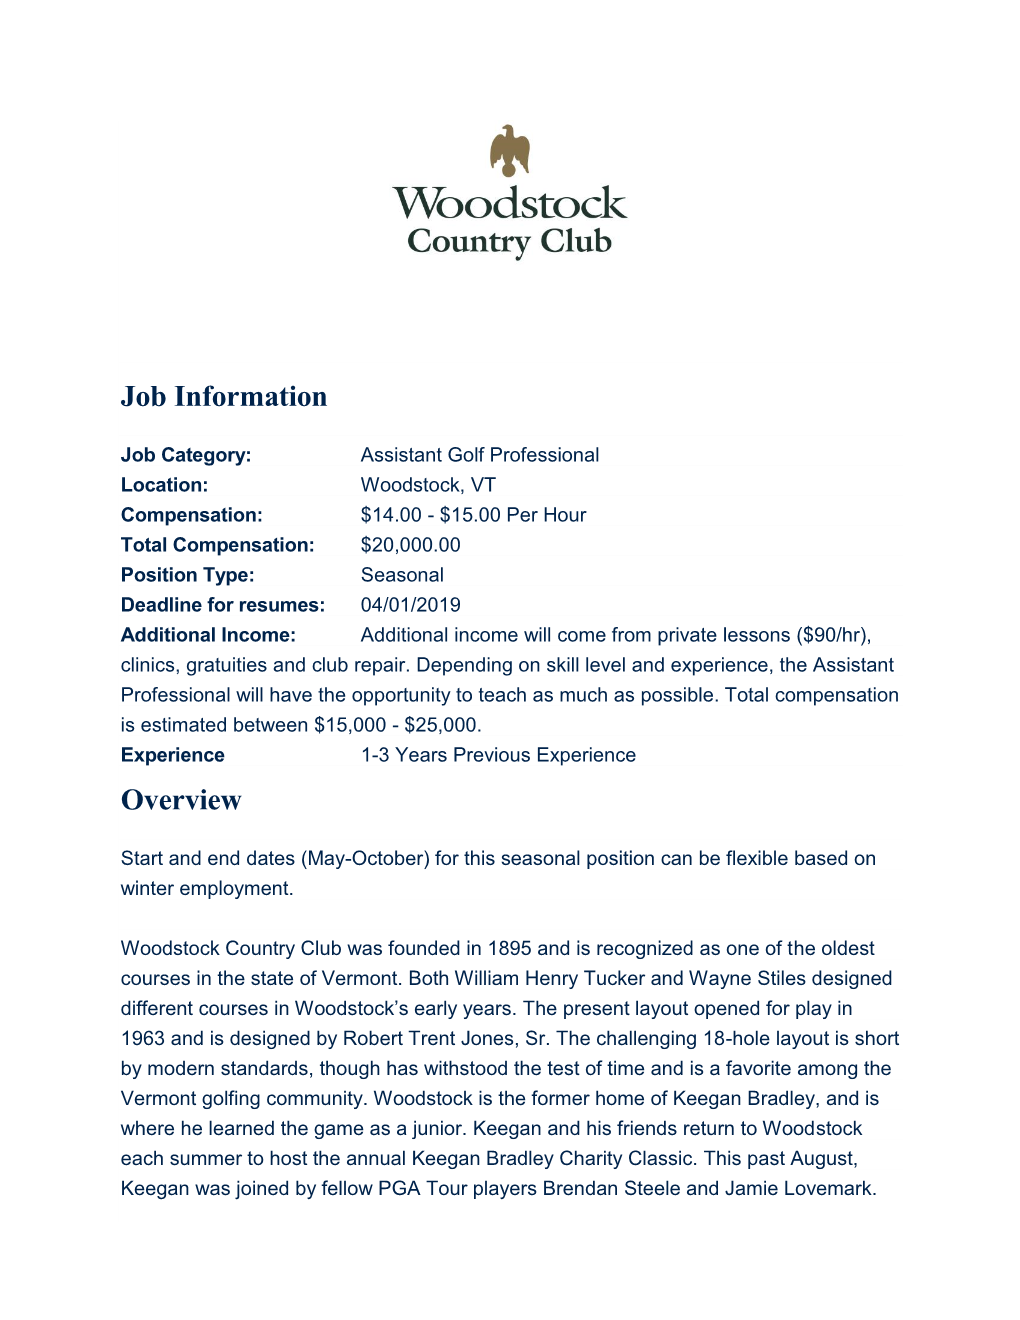 Job Information Overview